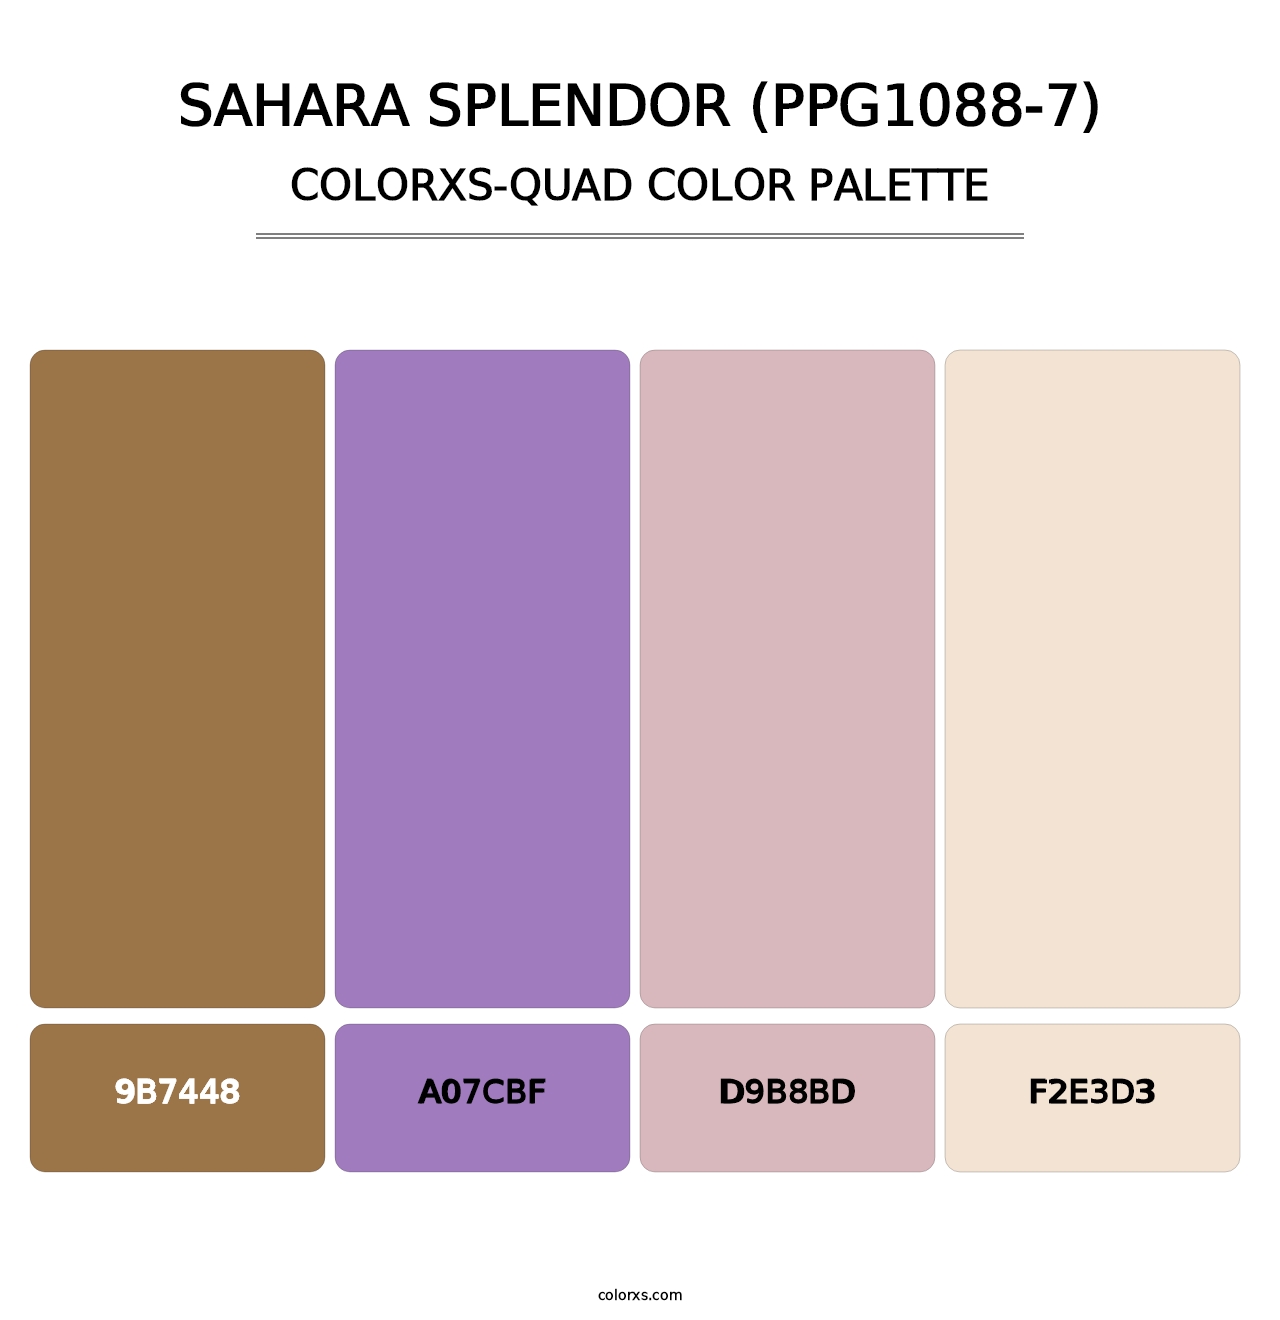 Sahara Splendor (PPG1088-7) - Colorxs Quad Palette